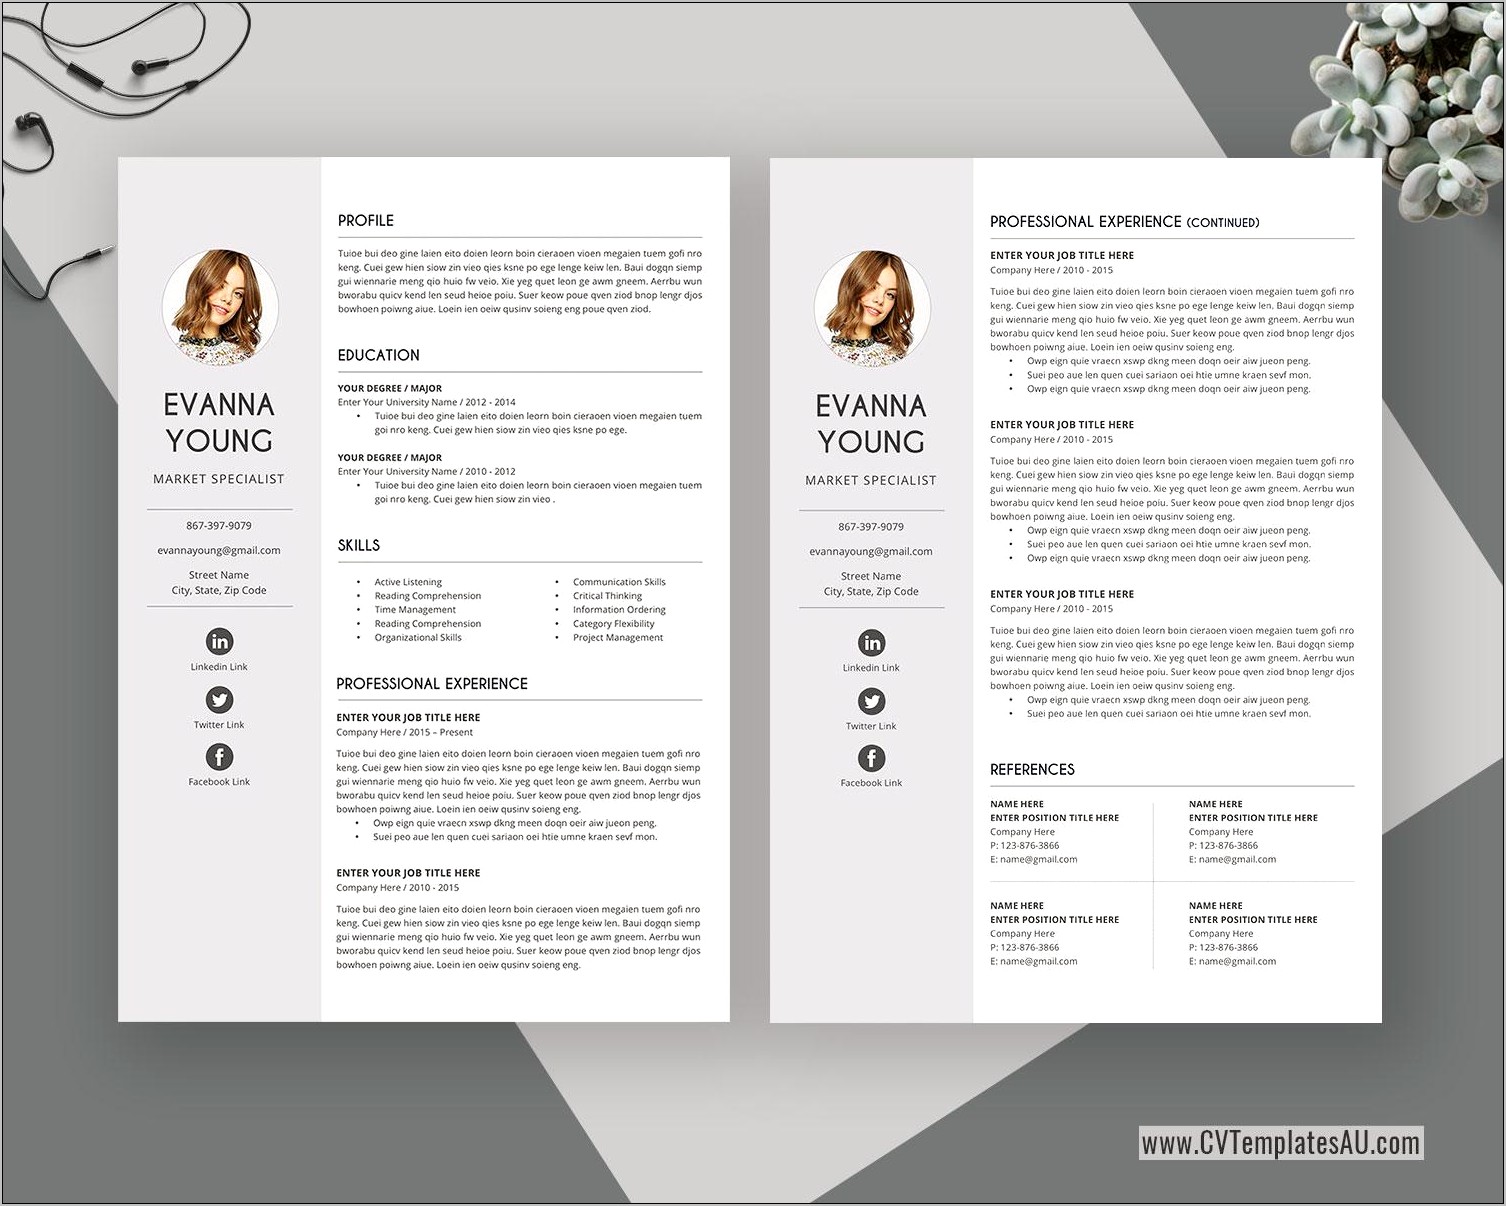 Microsoft Word Resume Template 2010 Download